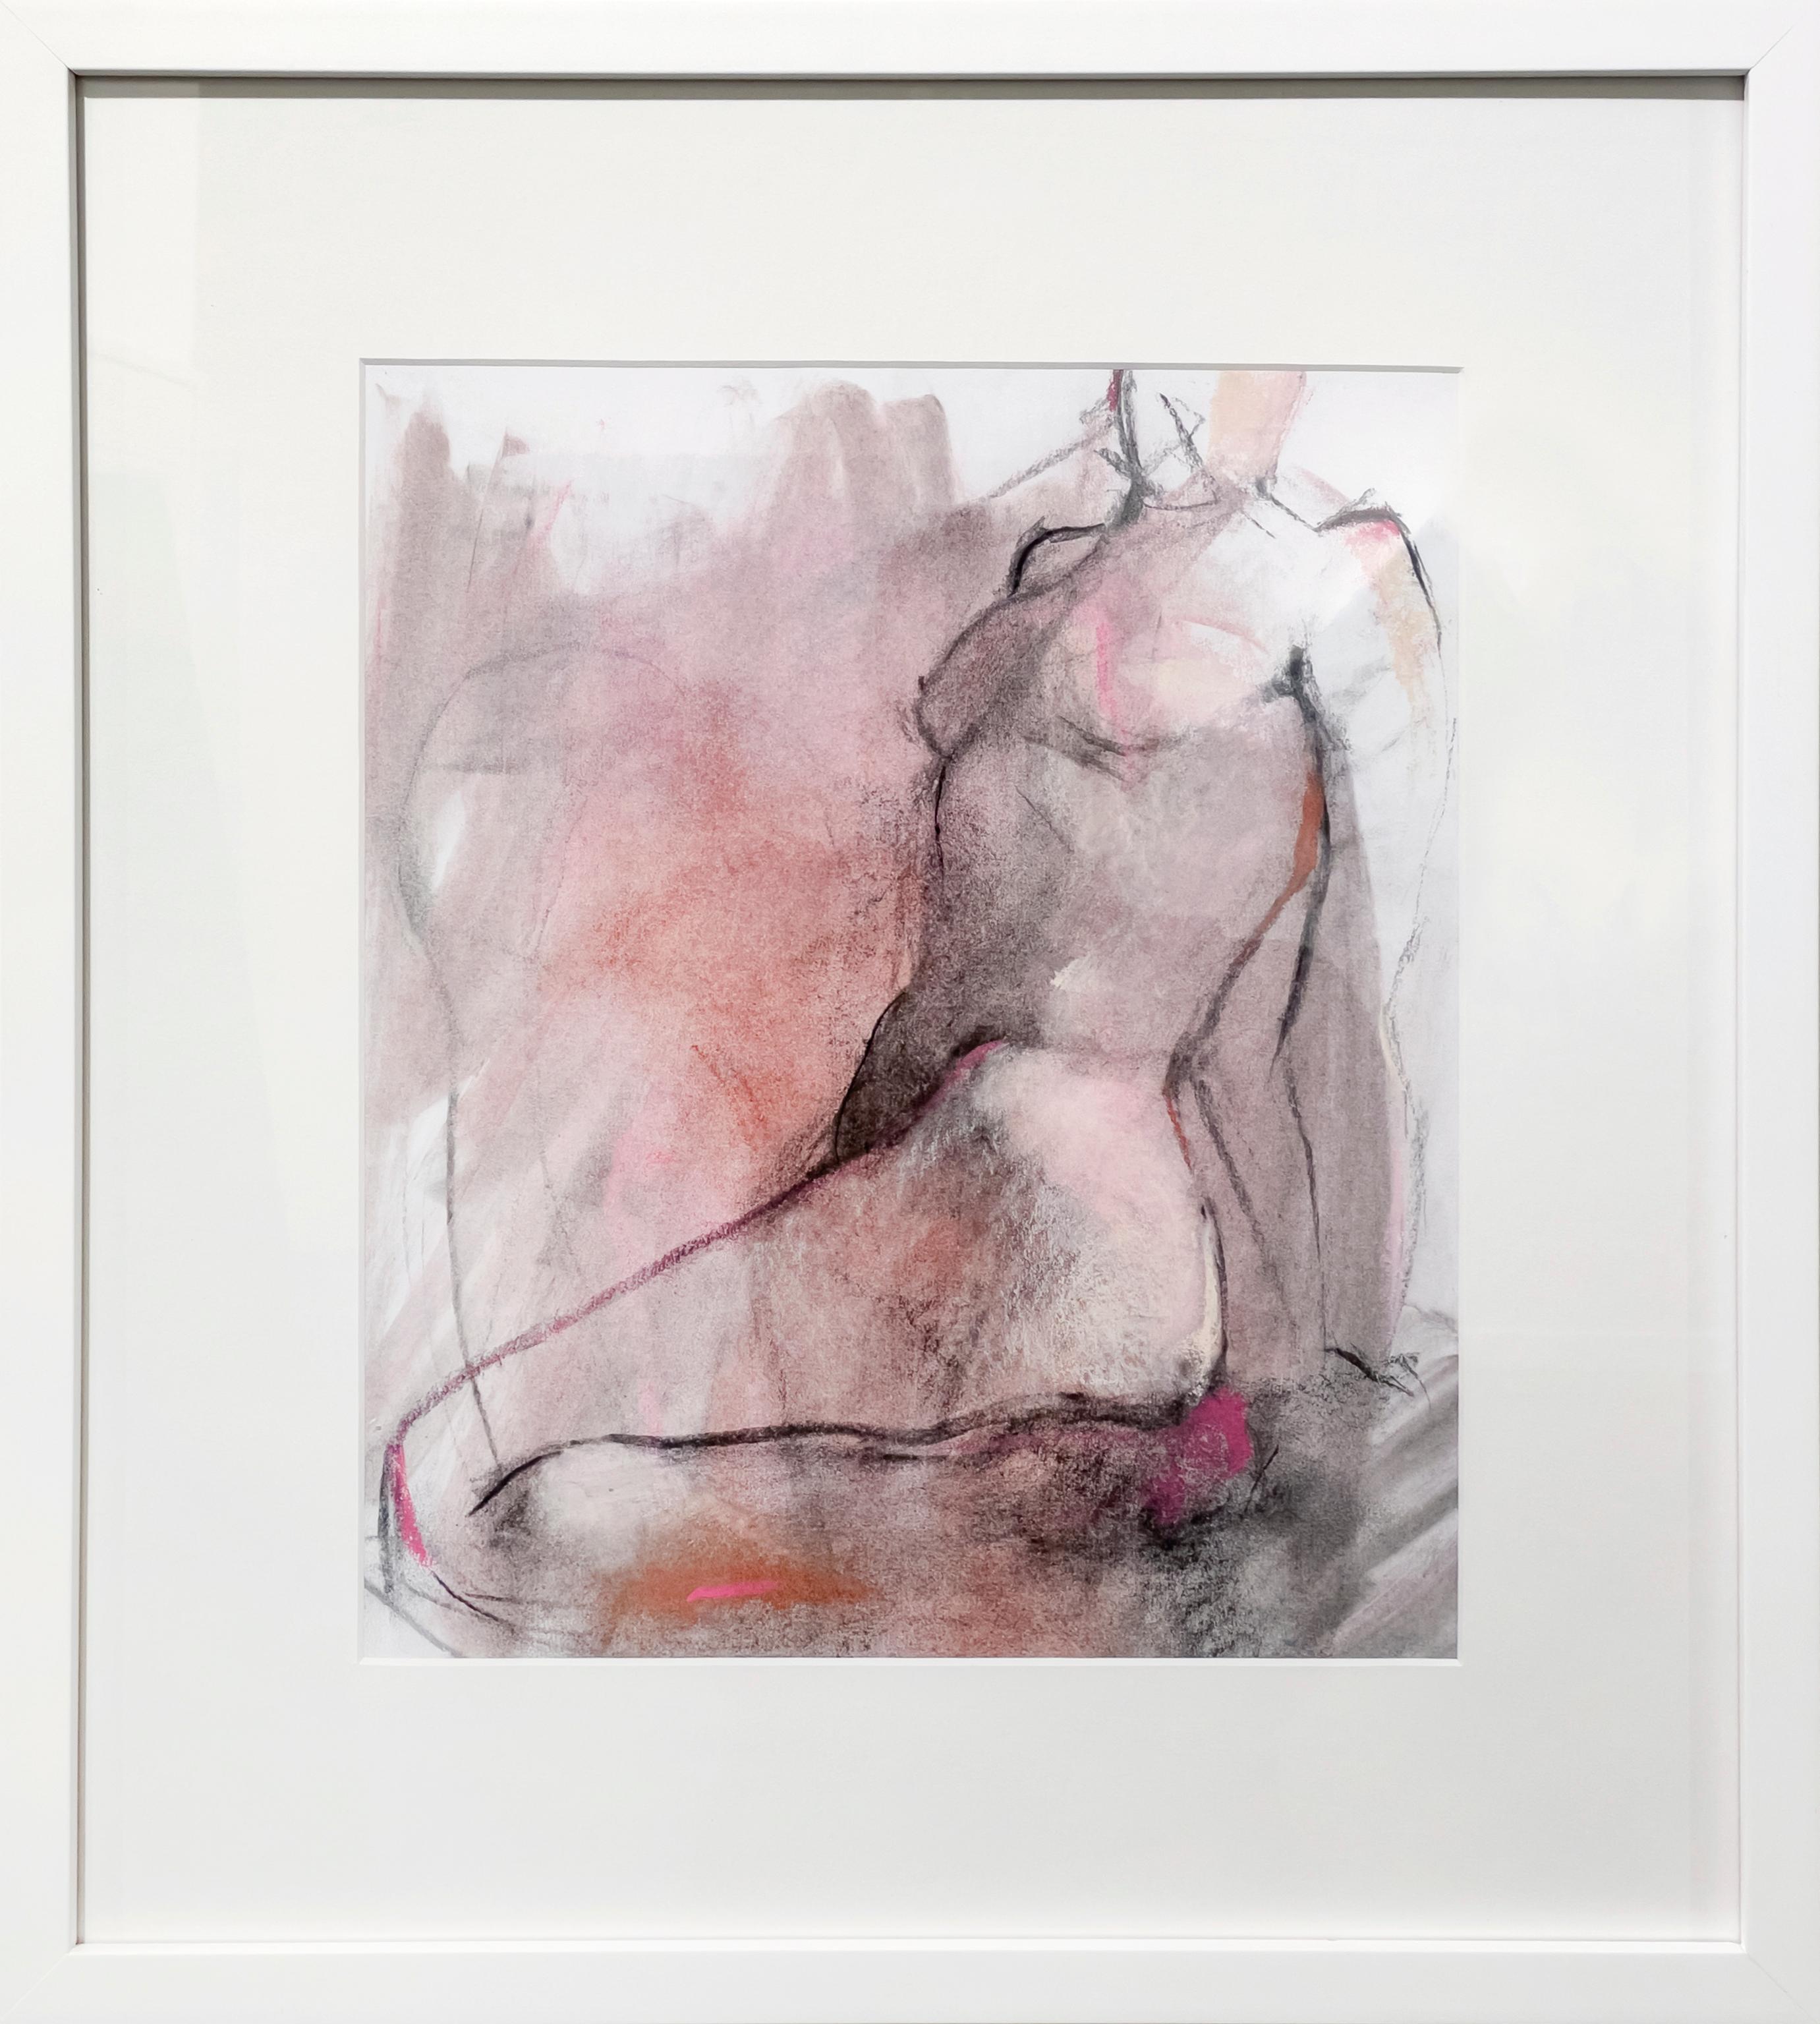 Figurative Art Kelly Rossetti - "Shades of Pink" (Les nus de rose), dessin de personnage nu abstrait